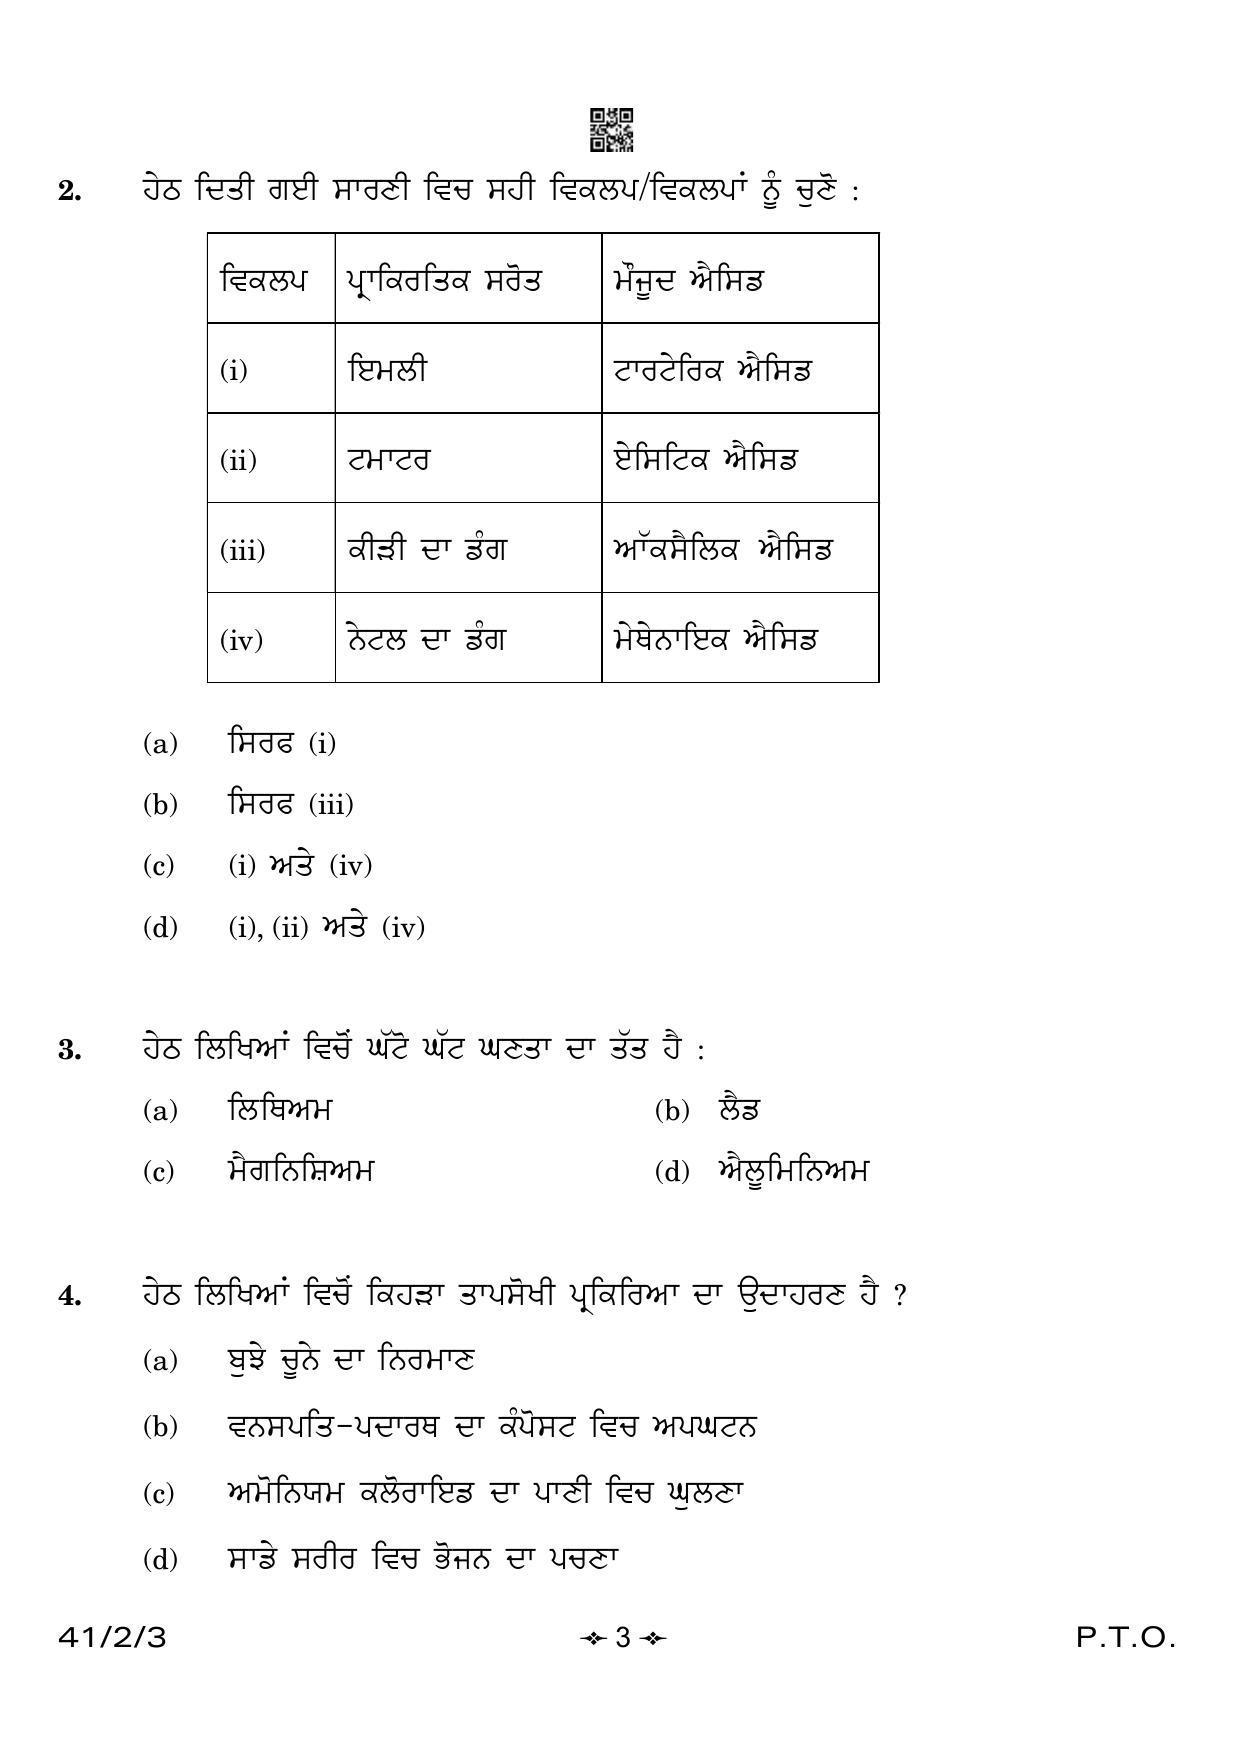 CBSE Class 10 41-2-3 Science Punjabi Version 2023 Question Paper - Page 3